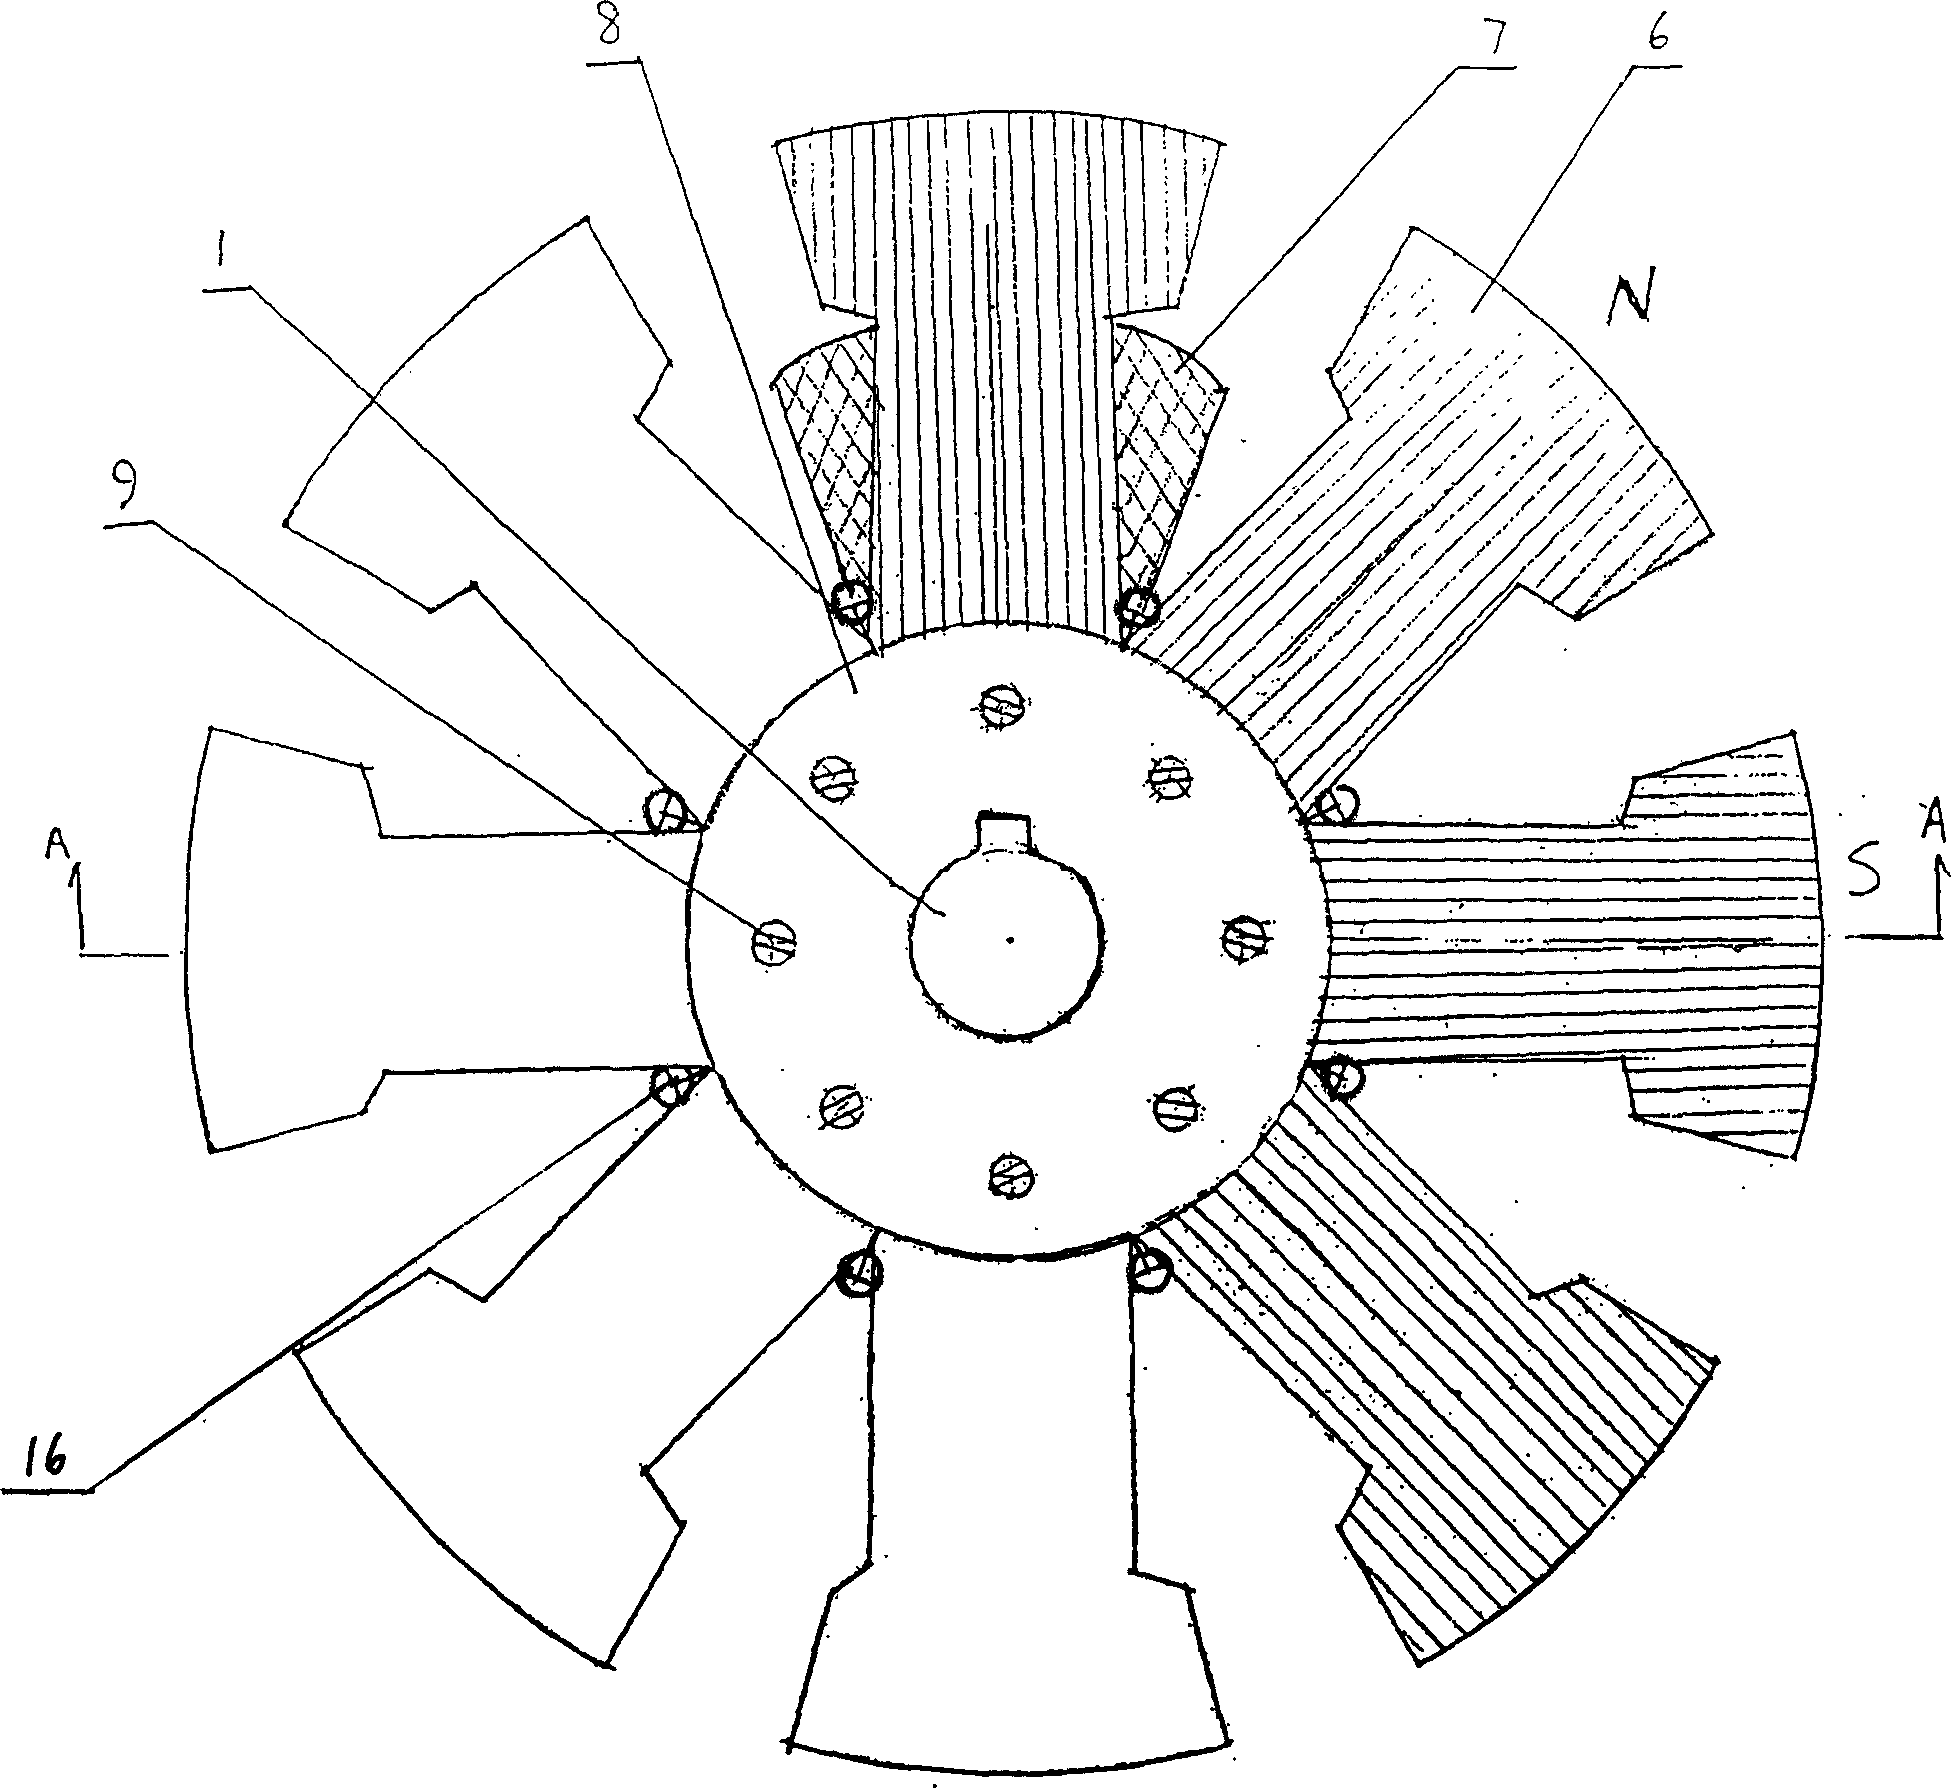 Slotless asgchronous motor